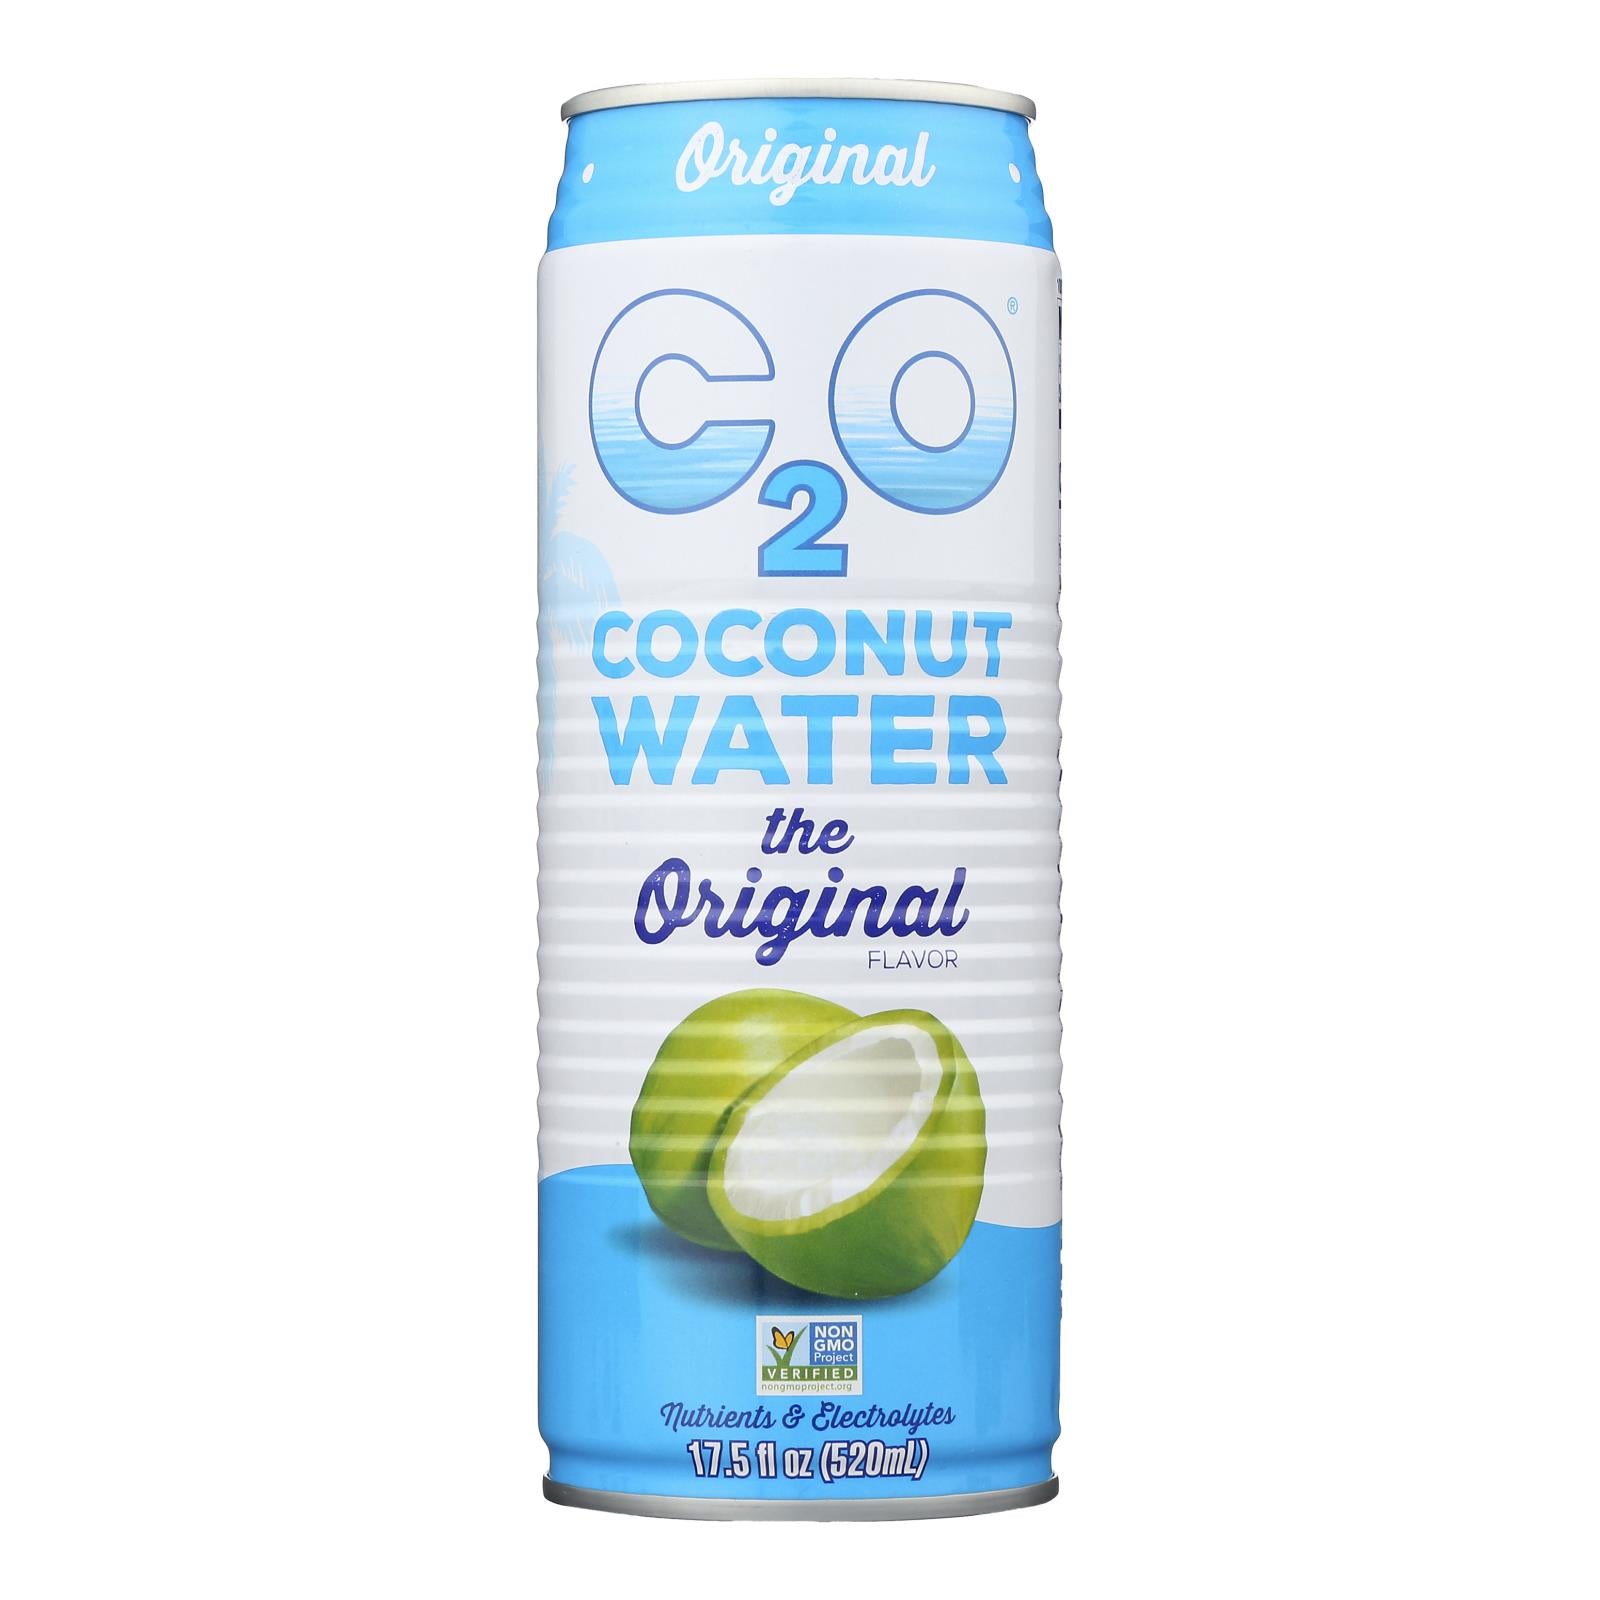 C2o - Pure Coconut Water Pure Coconut Water - Case Of 12 - 17.5 Fl Oz